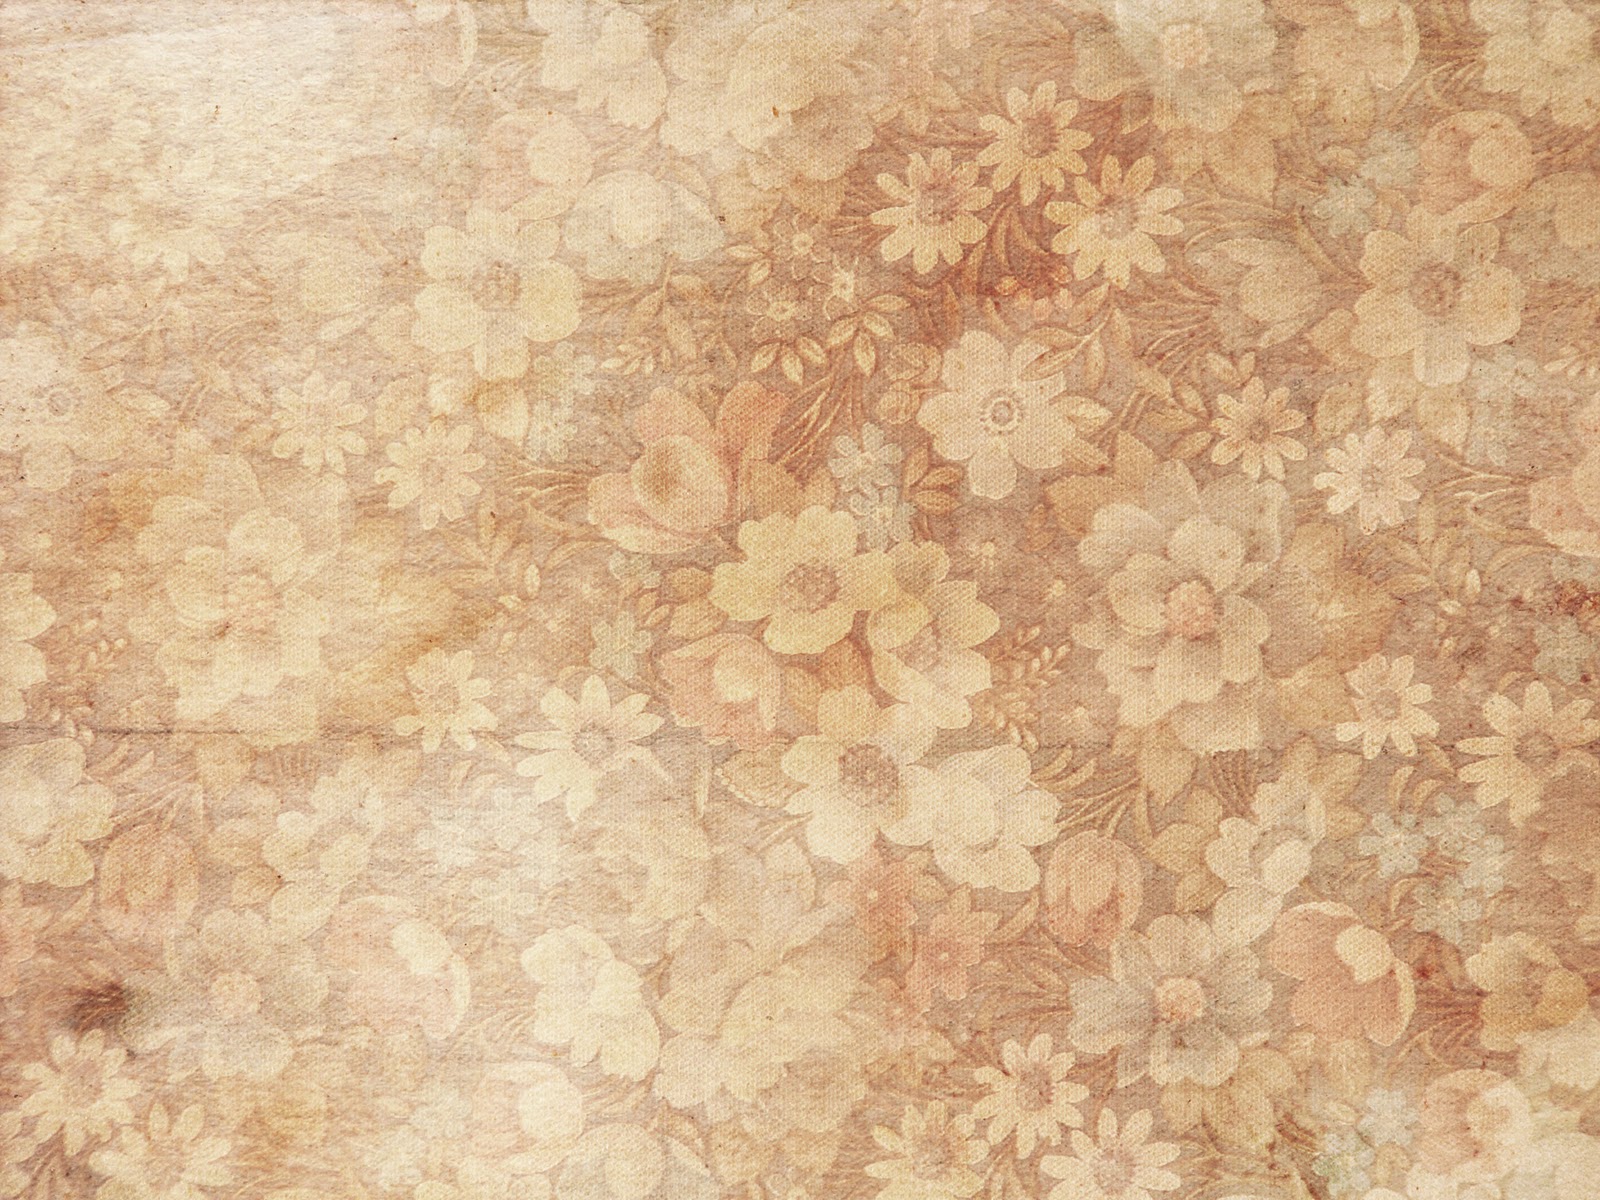 Compartir 142+ imagem floral texture background - Thcshoanghoatham ...